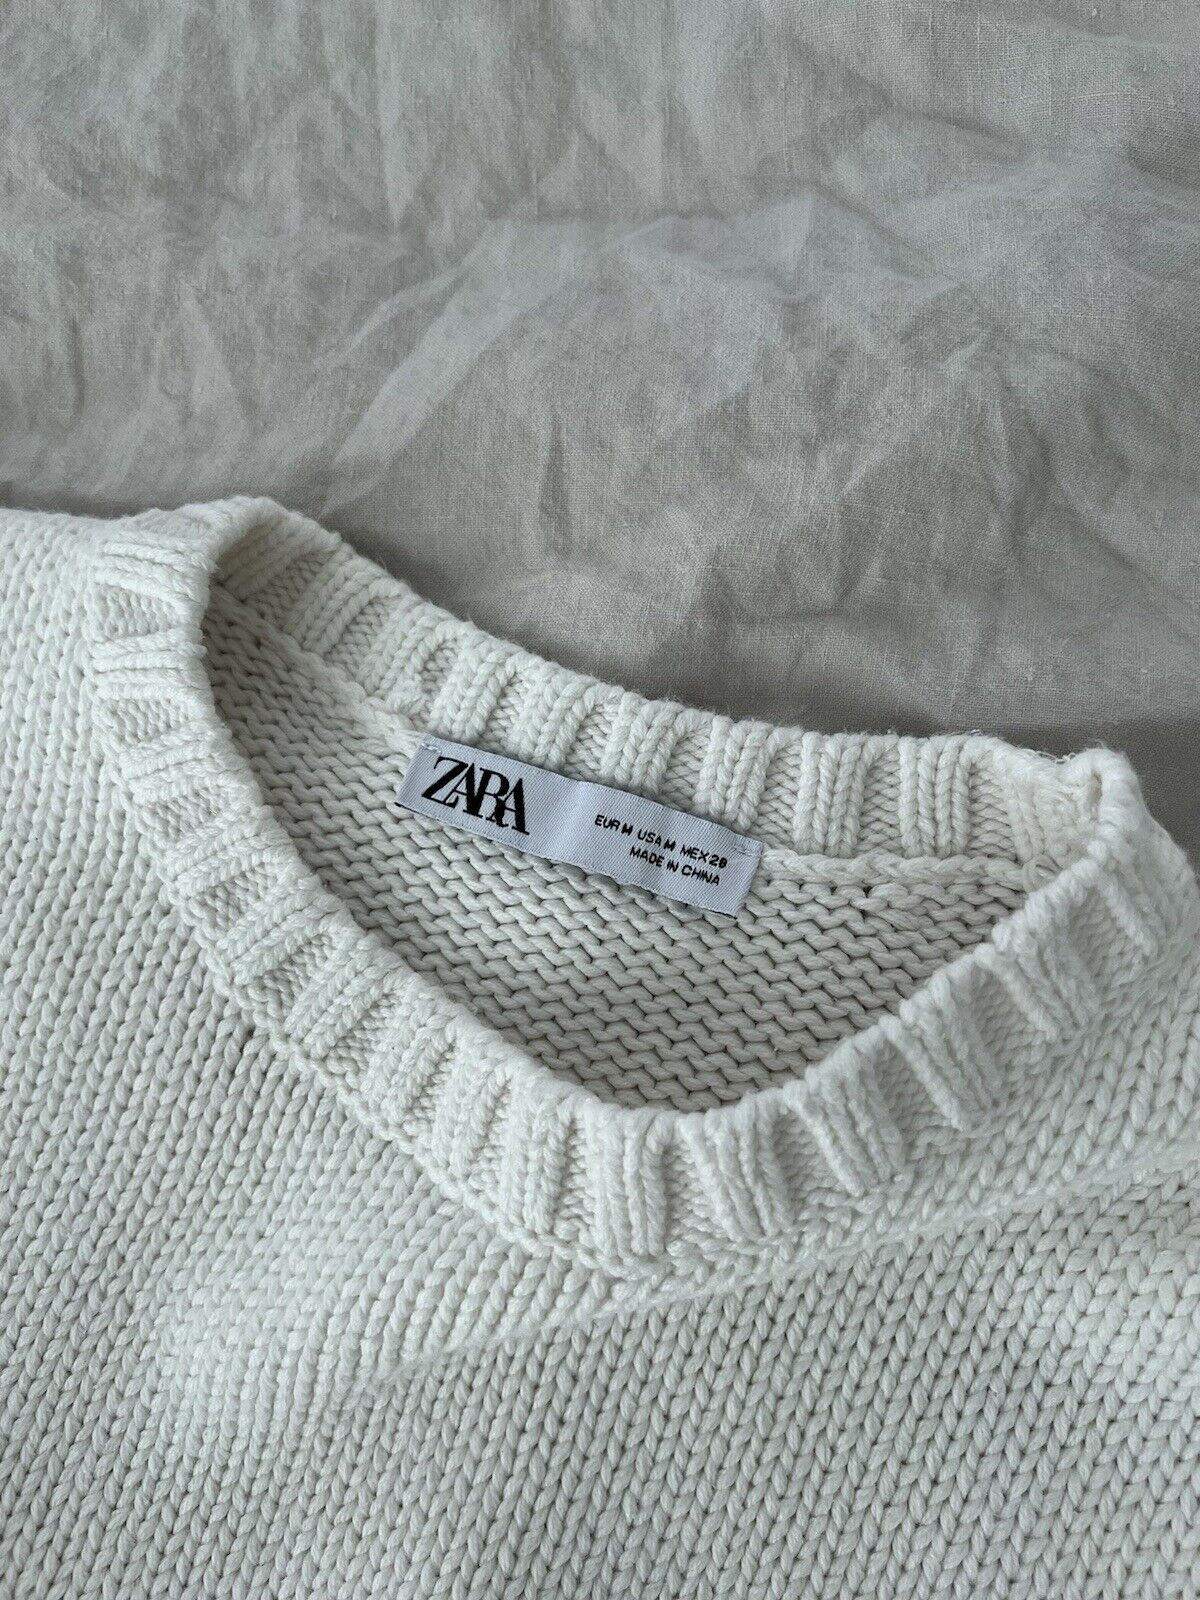 Zara White Sweater Vest Size Medium - image 6